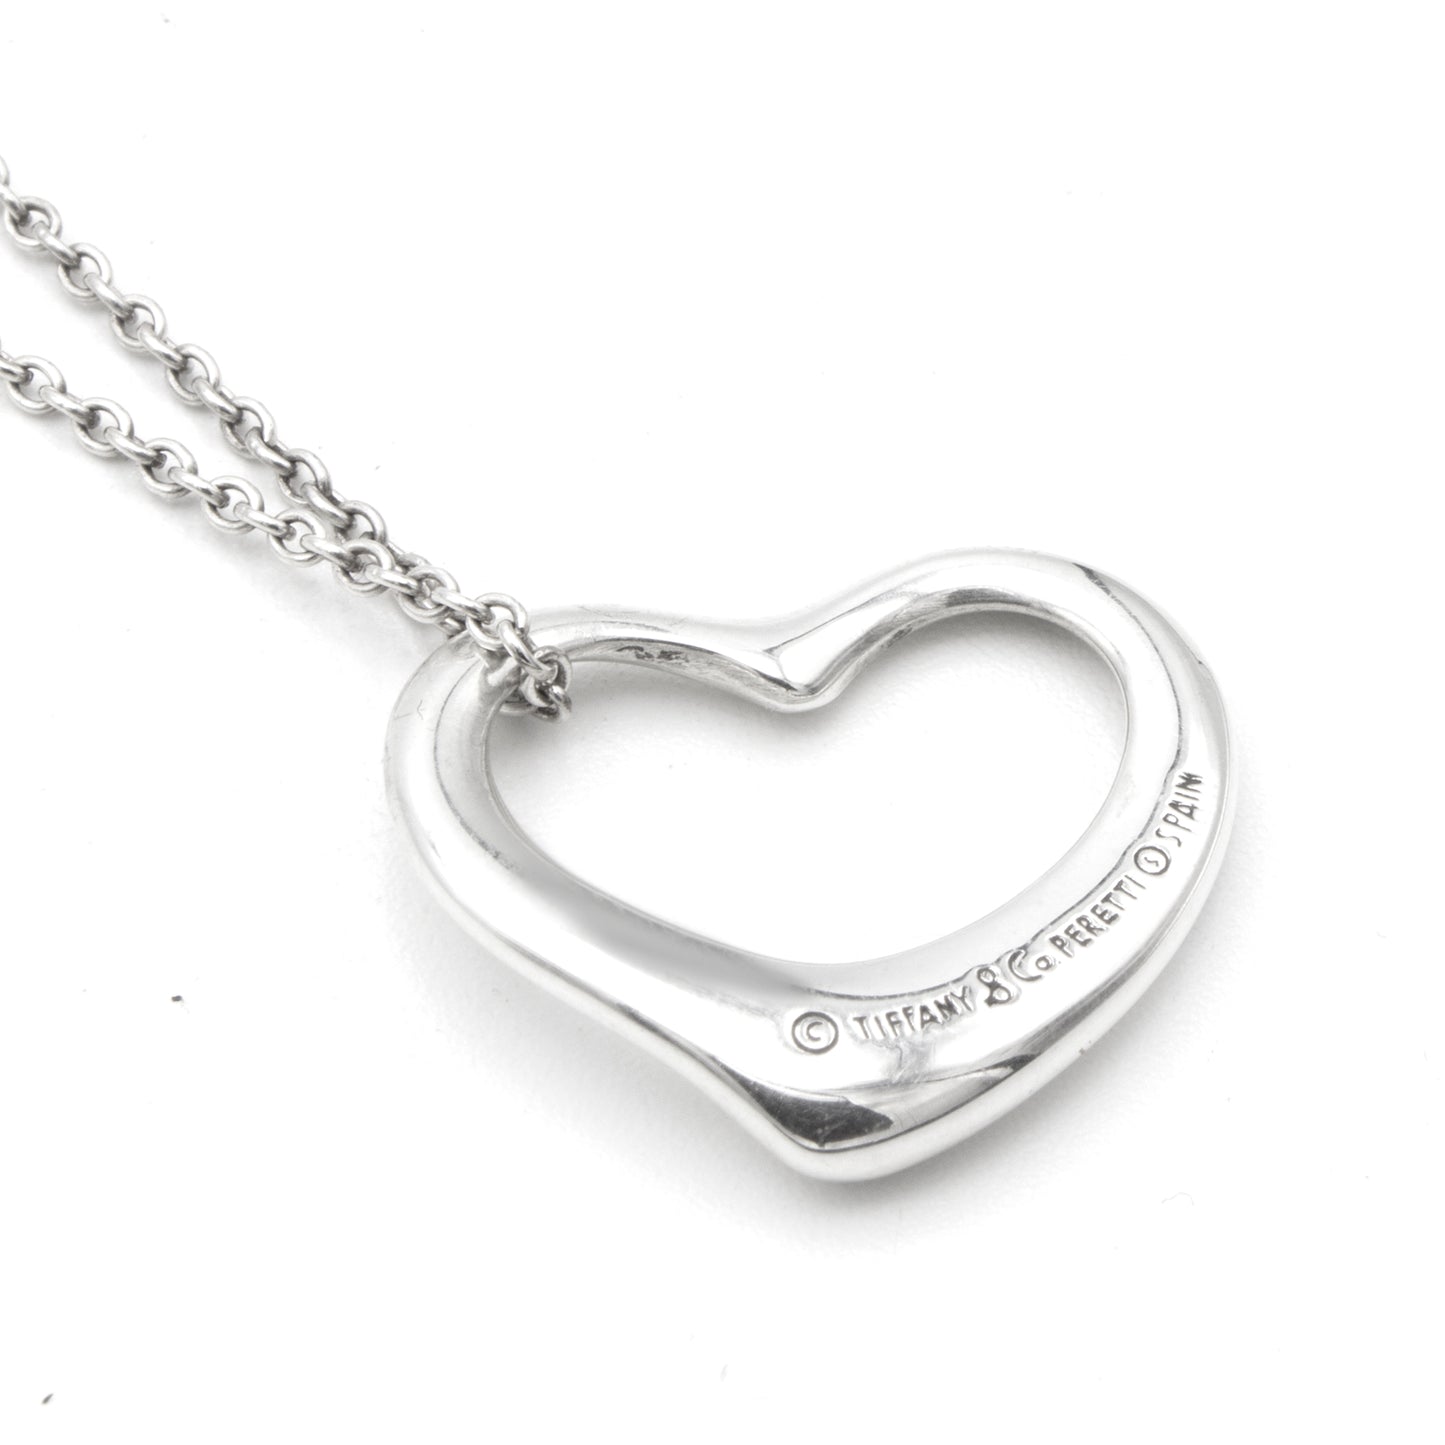 Tiffany & Co Open Heart 22mm necklace